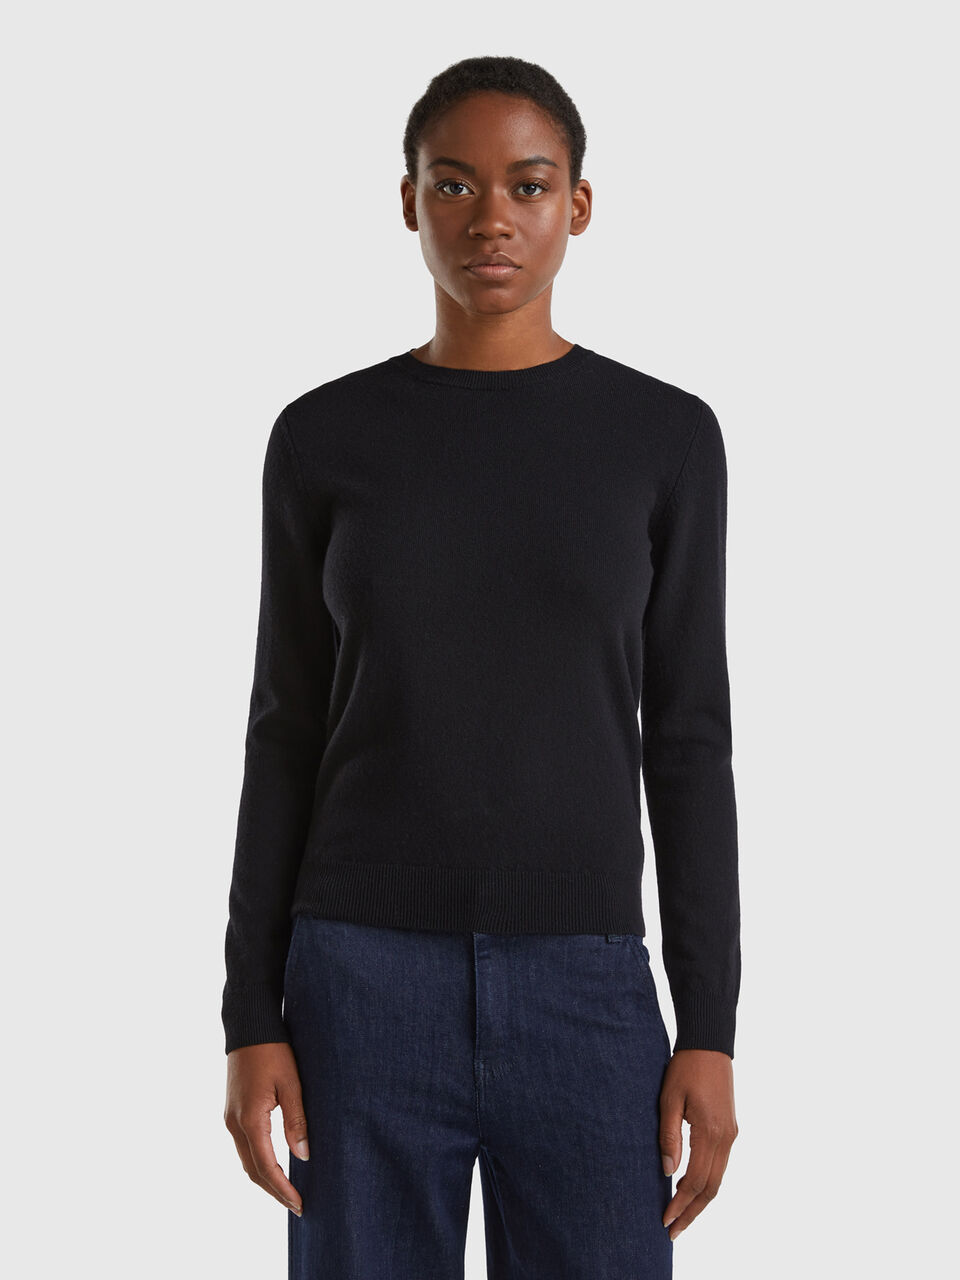 Stylish Woolen Full Sleeves Collar Neck Black Sweater For Women's